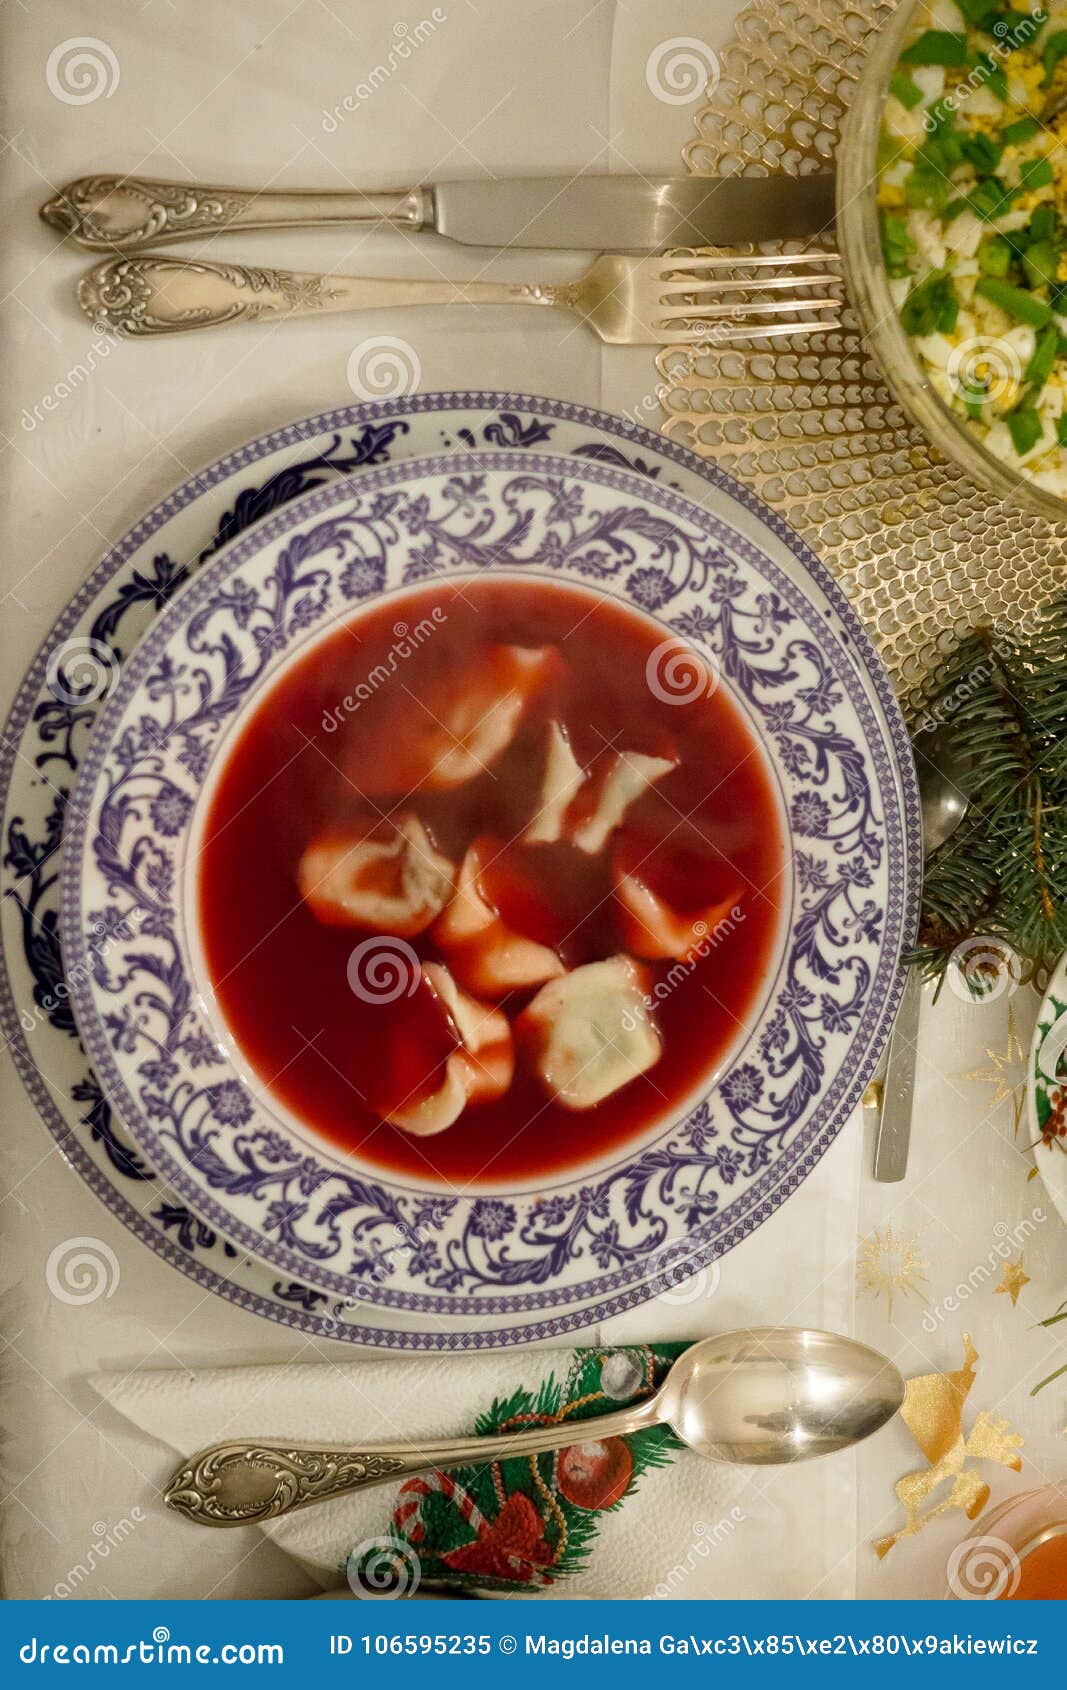 Polish Christmas Red Beet Soup With Dumplings Stock Image - Image of ...